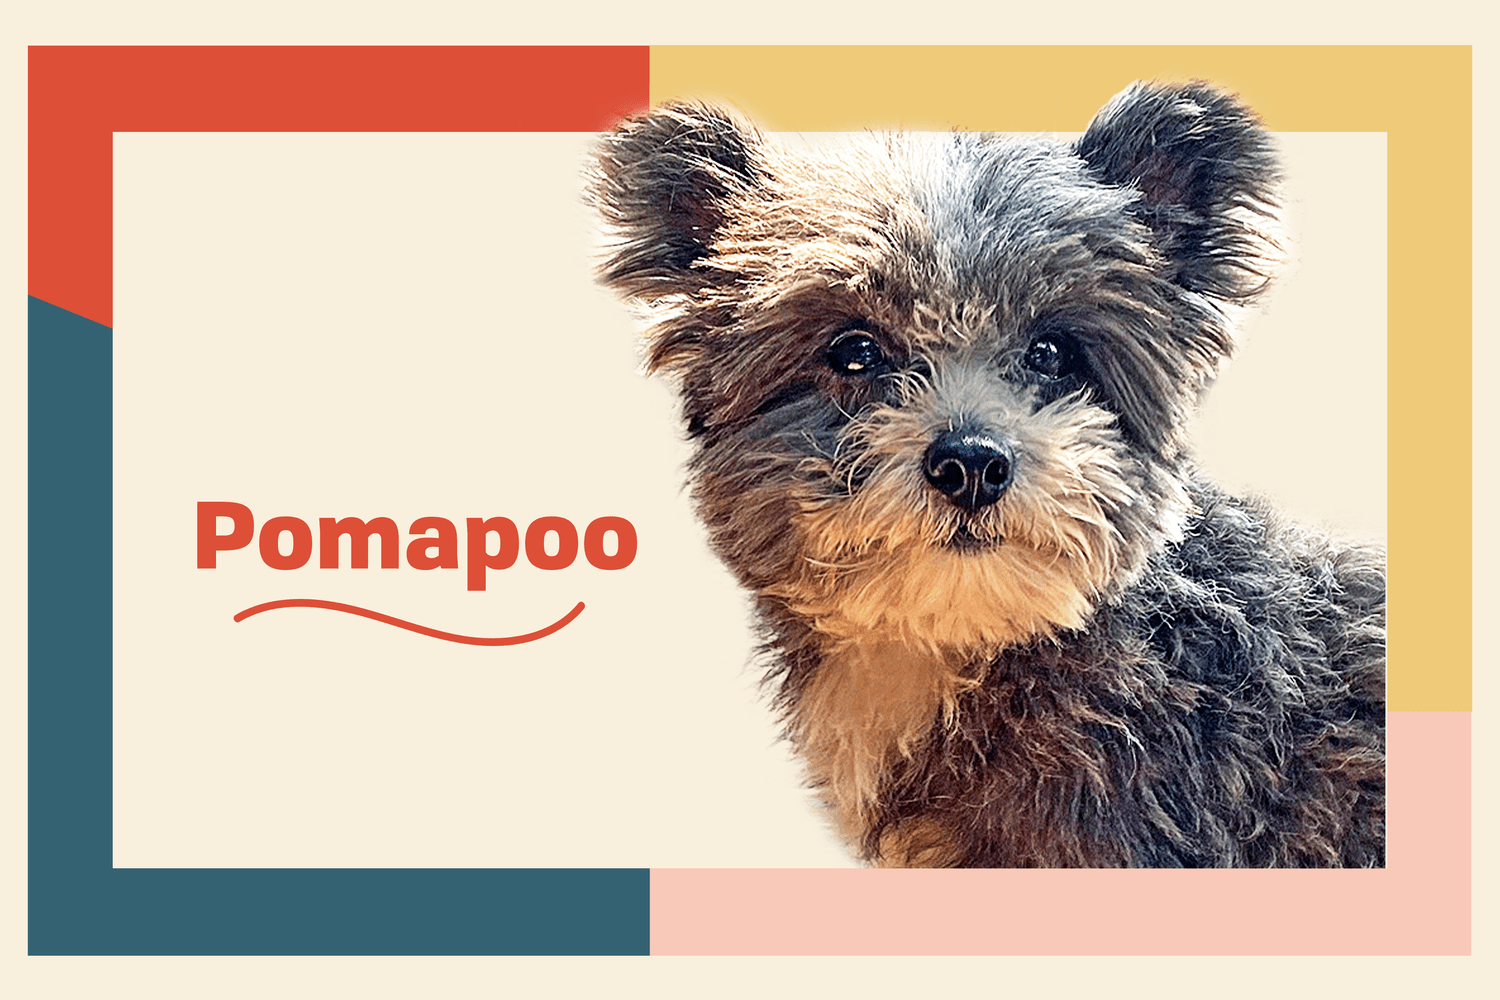 Pomapoo on breed profile treatment